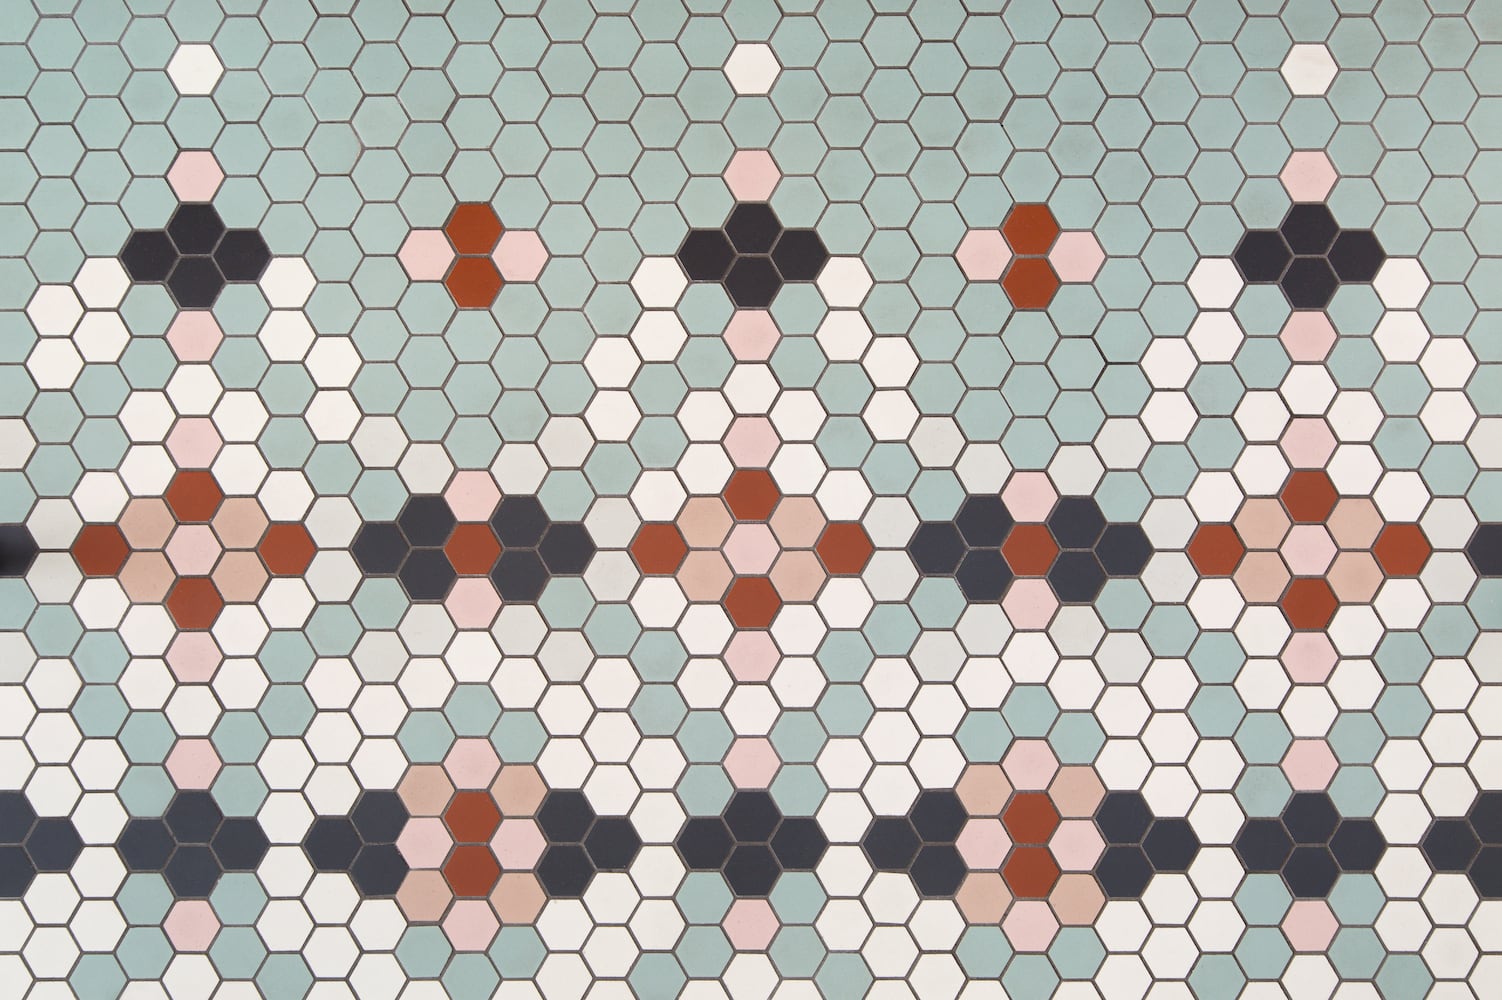 Patterned hexagon mosaic tile floor, beautiful complex custom design